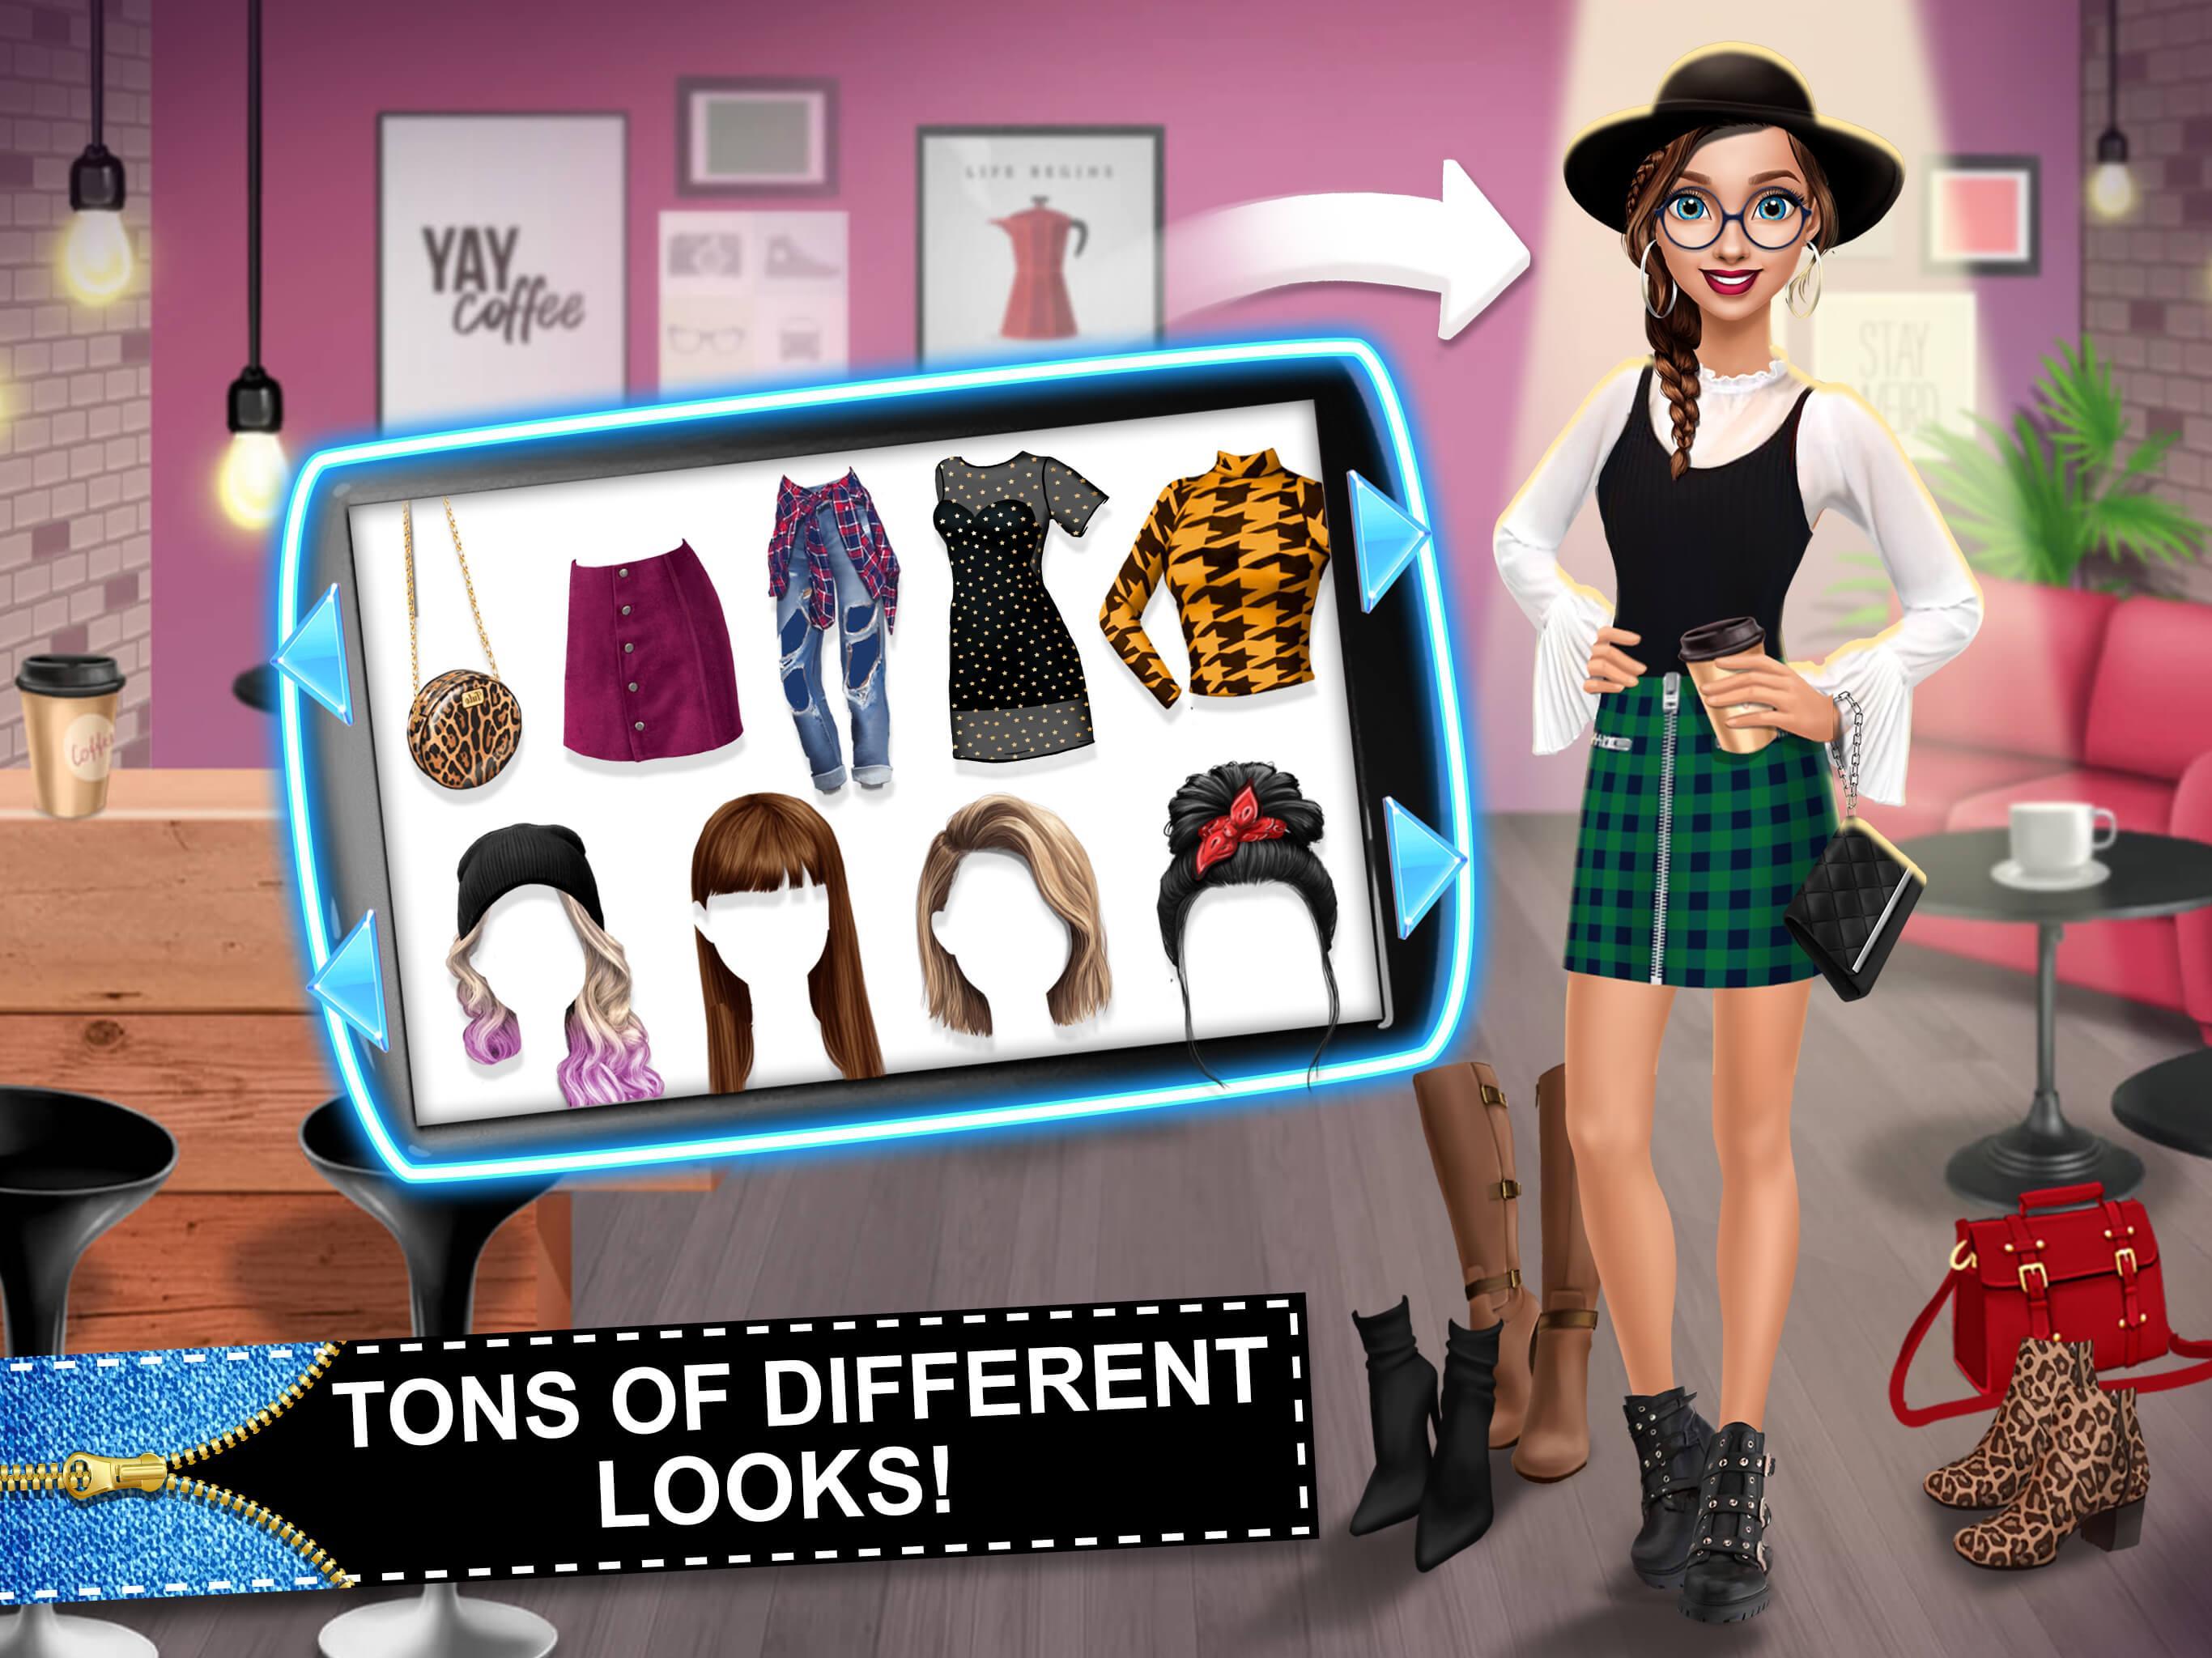 Мировой мода игра. Fashion World игра. Игра шоппинг. Hannah - Fashion Dress up Competition арт. Fashion Designer girls games.